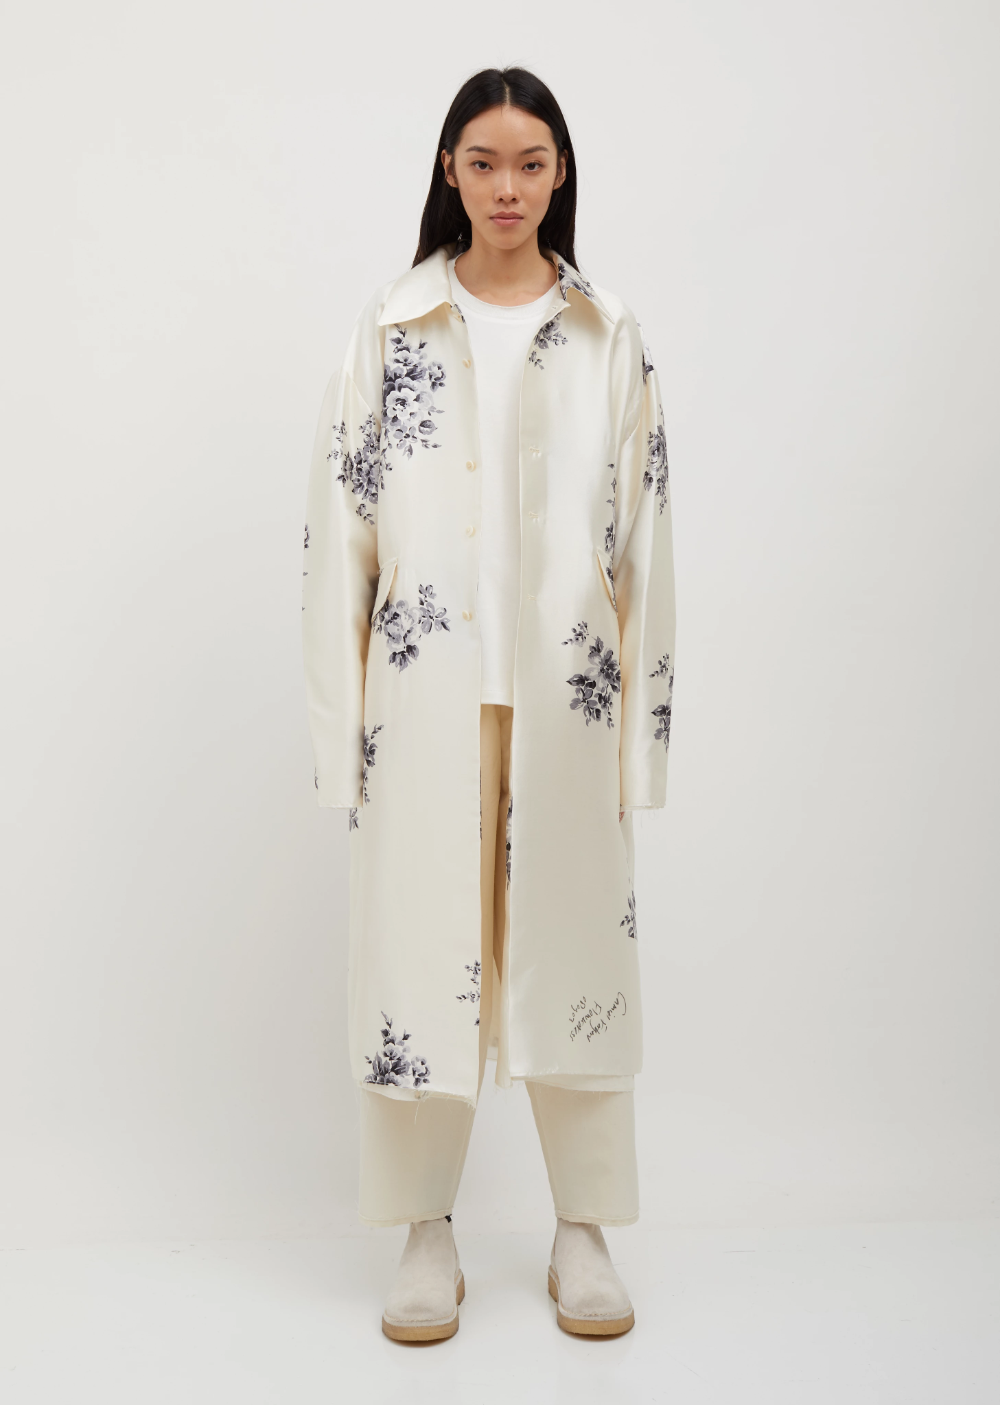 Handpainted Silk dress coat - X-Small / White -   11 dress Silk coats ideas